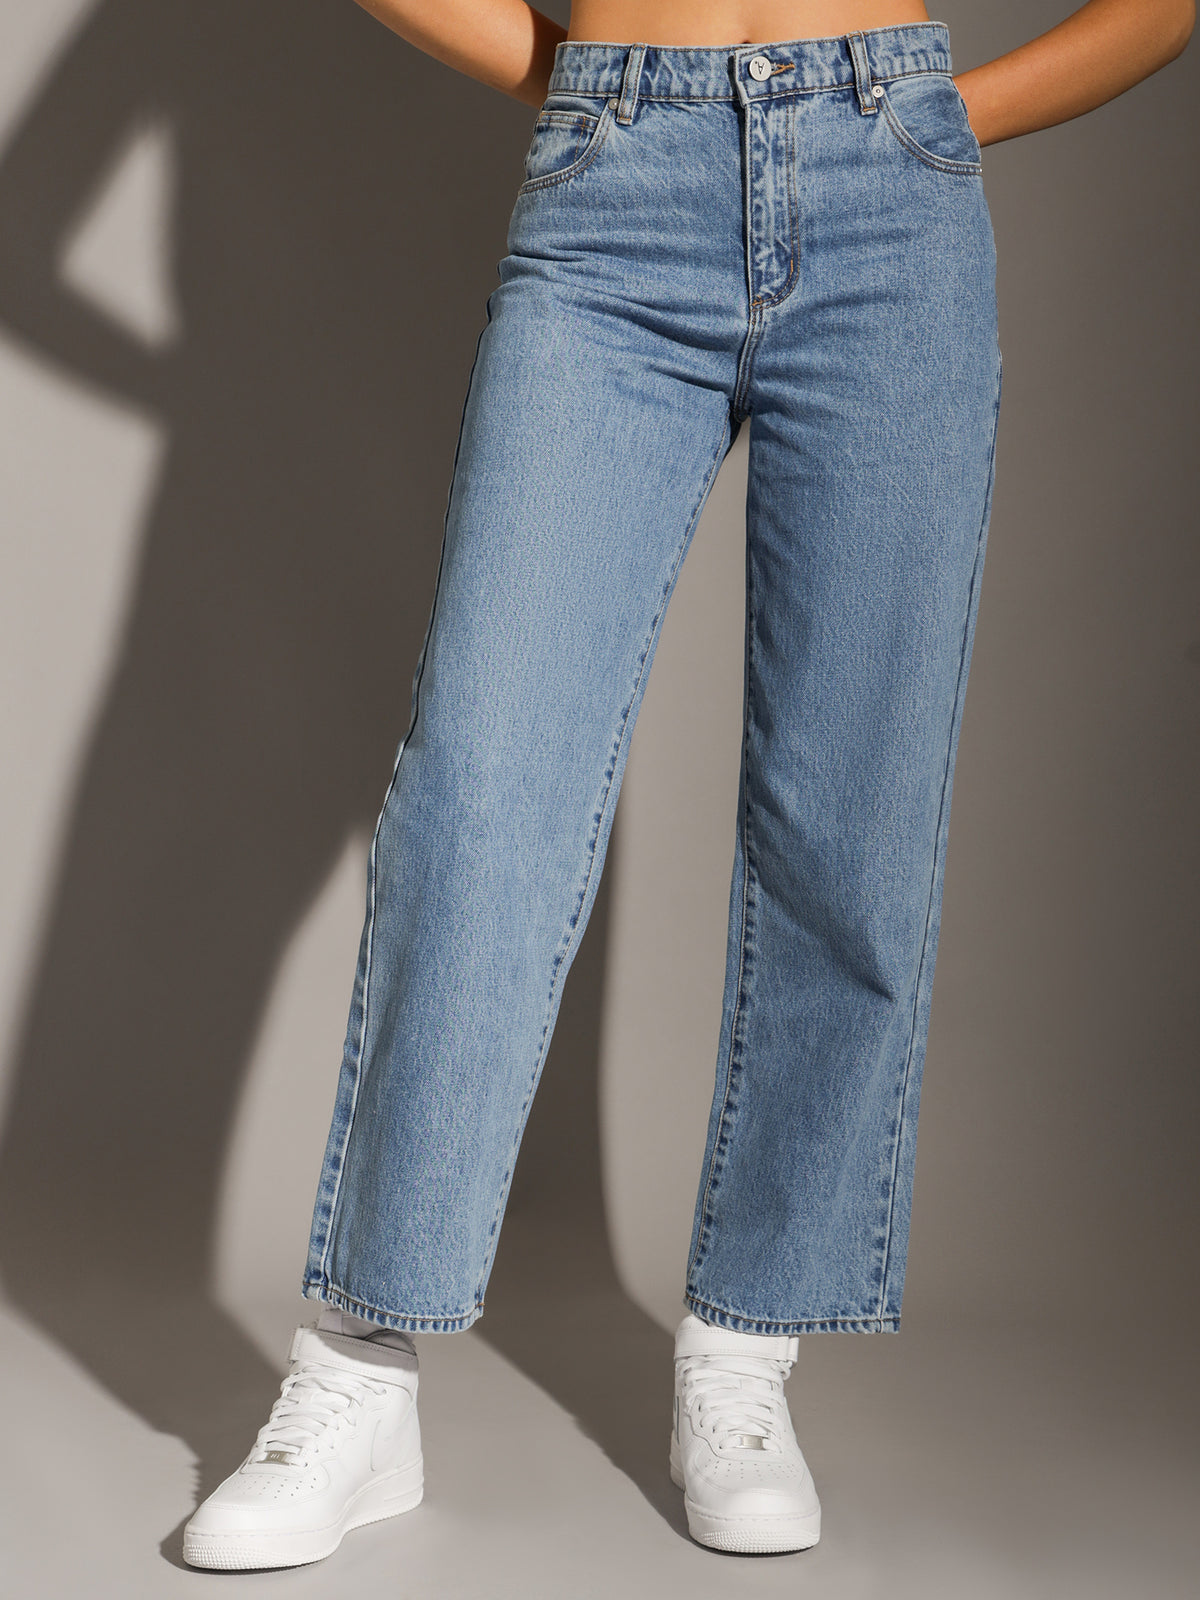 A Slouch Petite Jeans in Georgia Blue